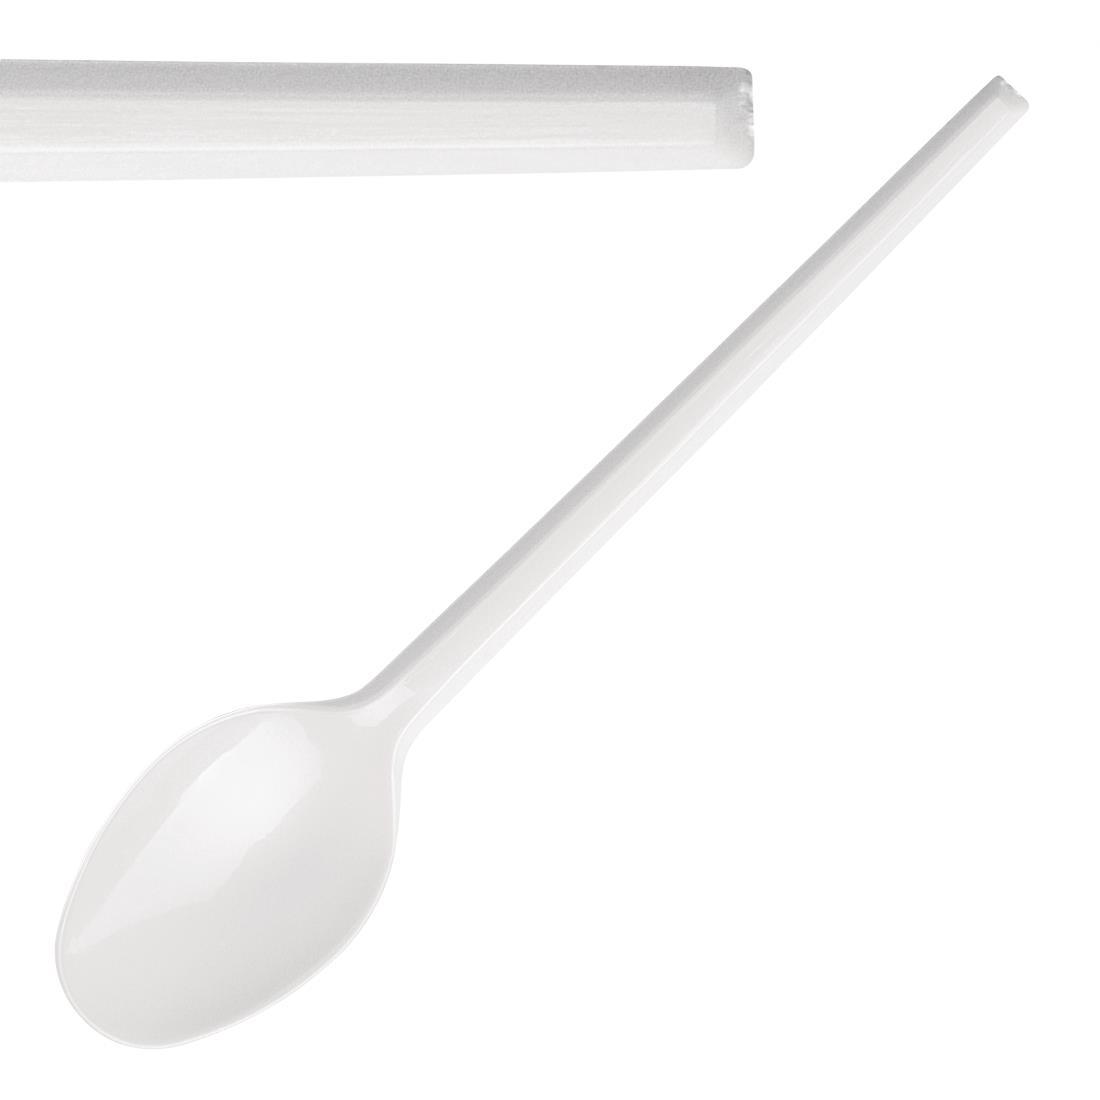 Fiesta Recyclable Lightweight Plastic Teaspoons White (Pack of 100) - U643  - 2